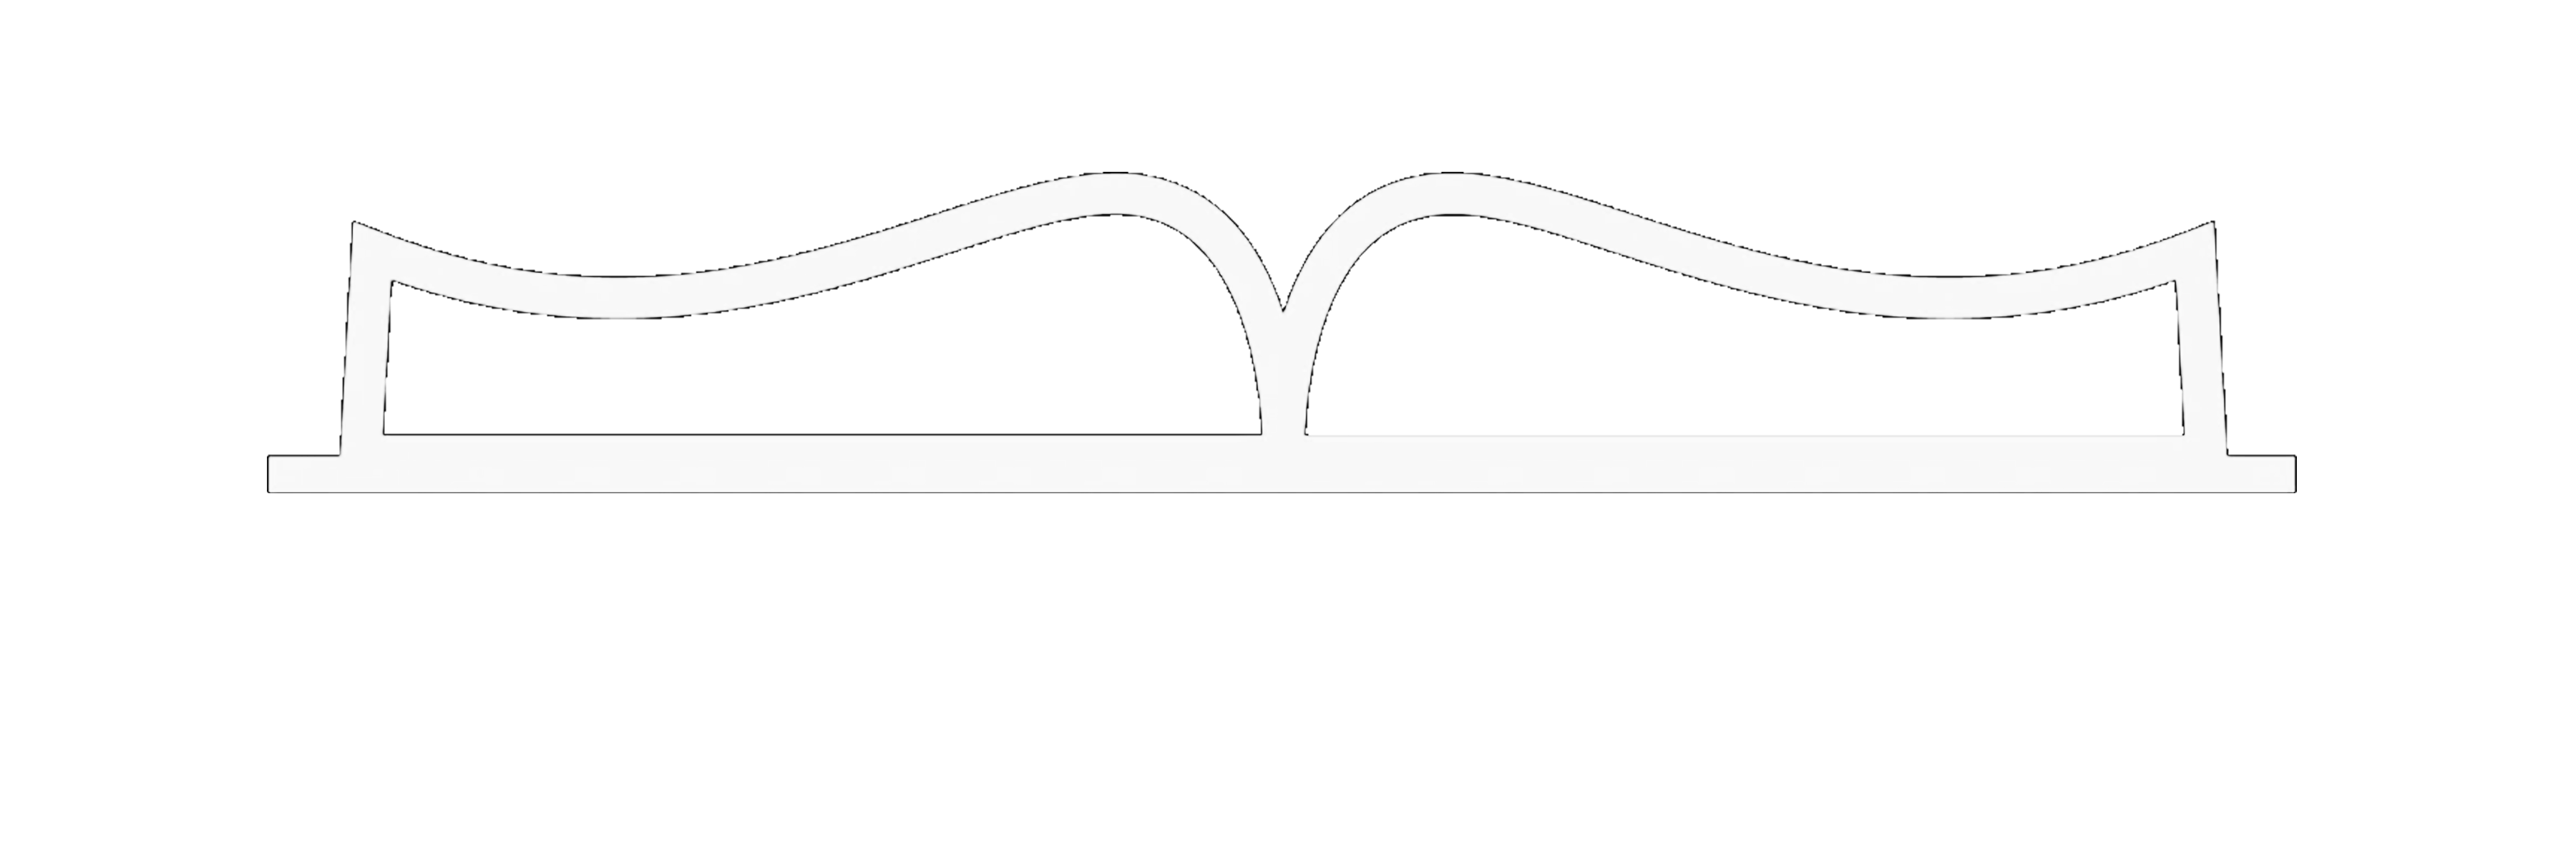 Savior Publishing House